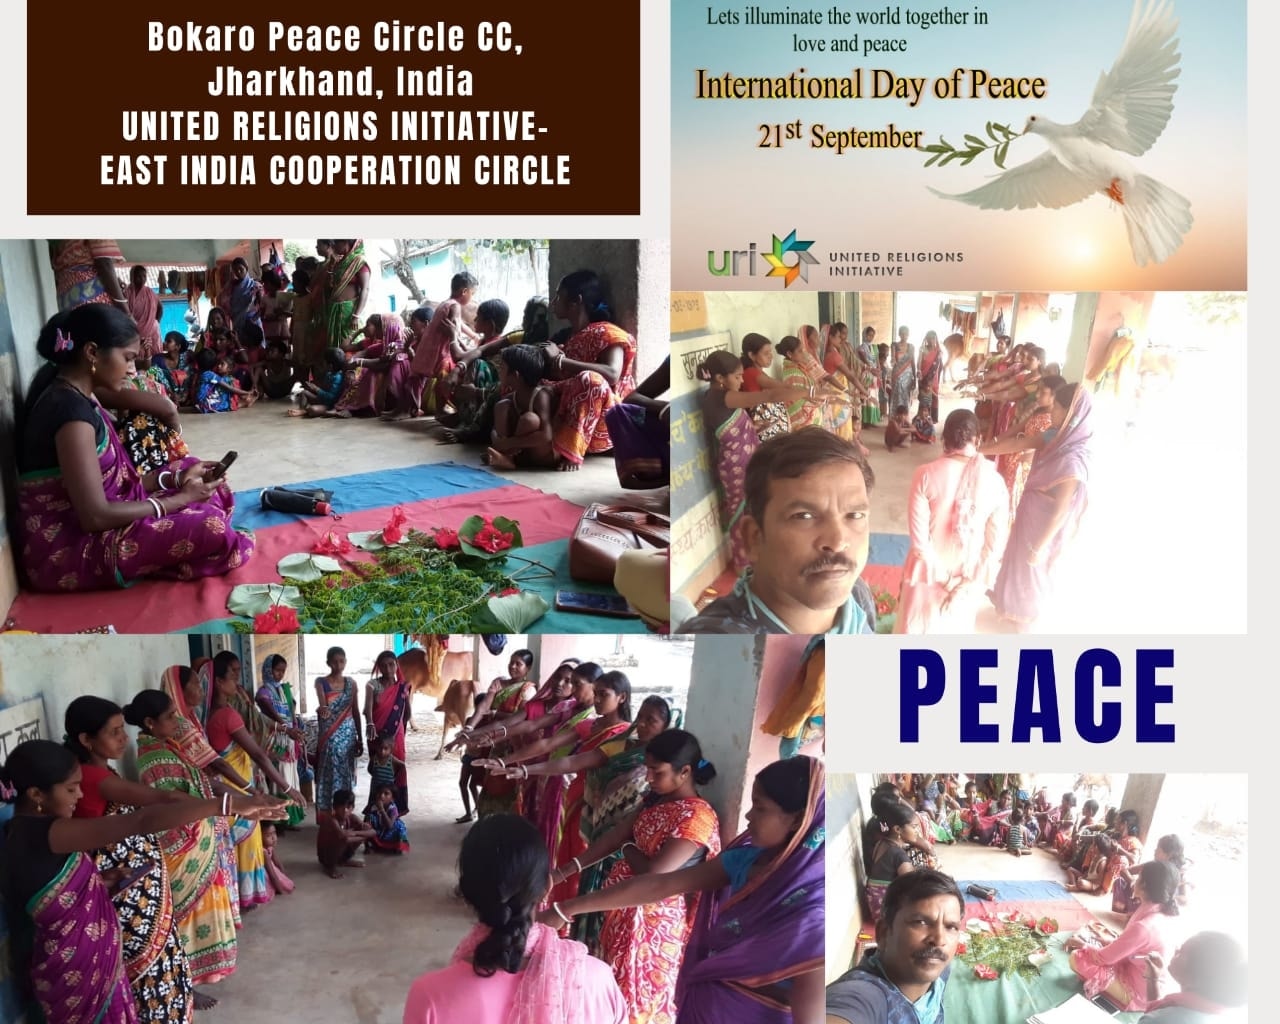 bokaro peace circle IDP2021.jpeg 